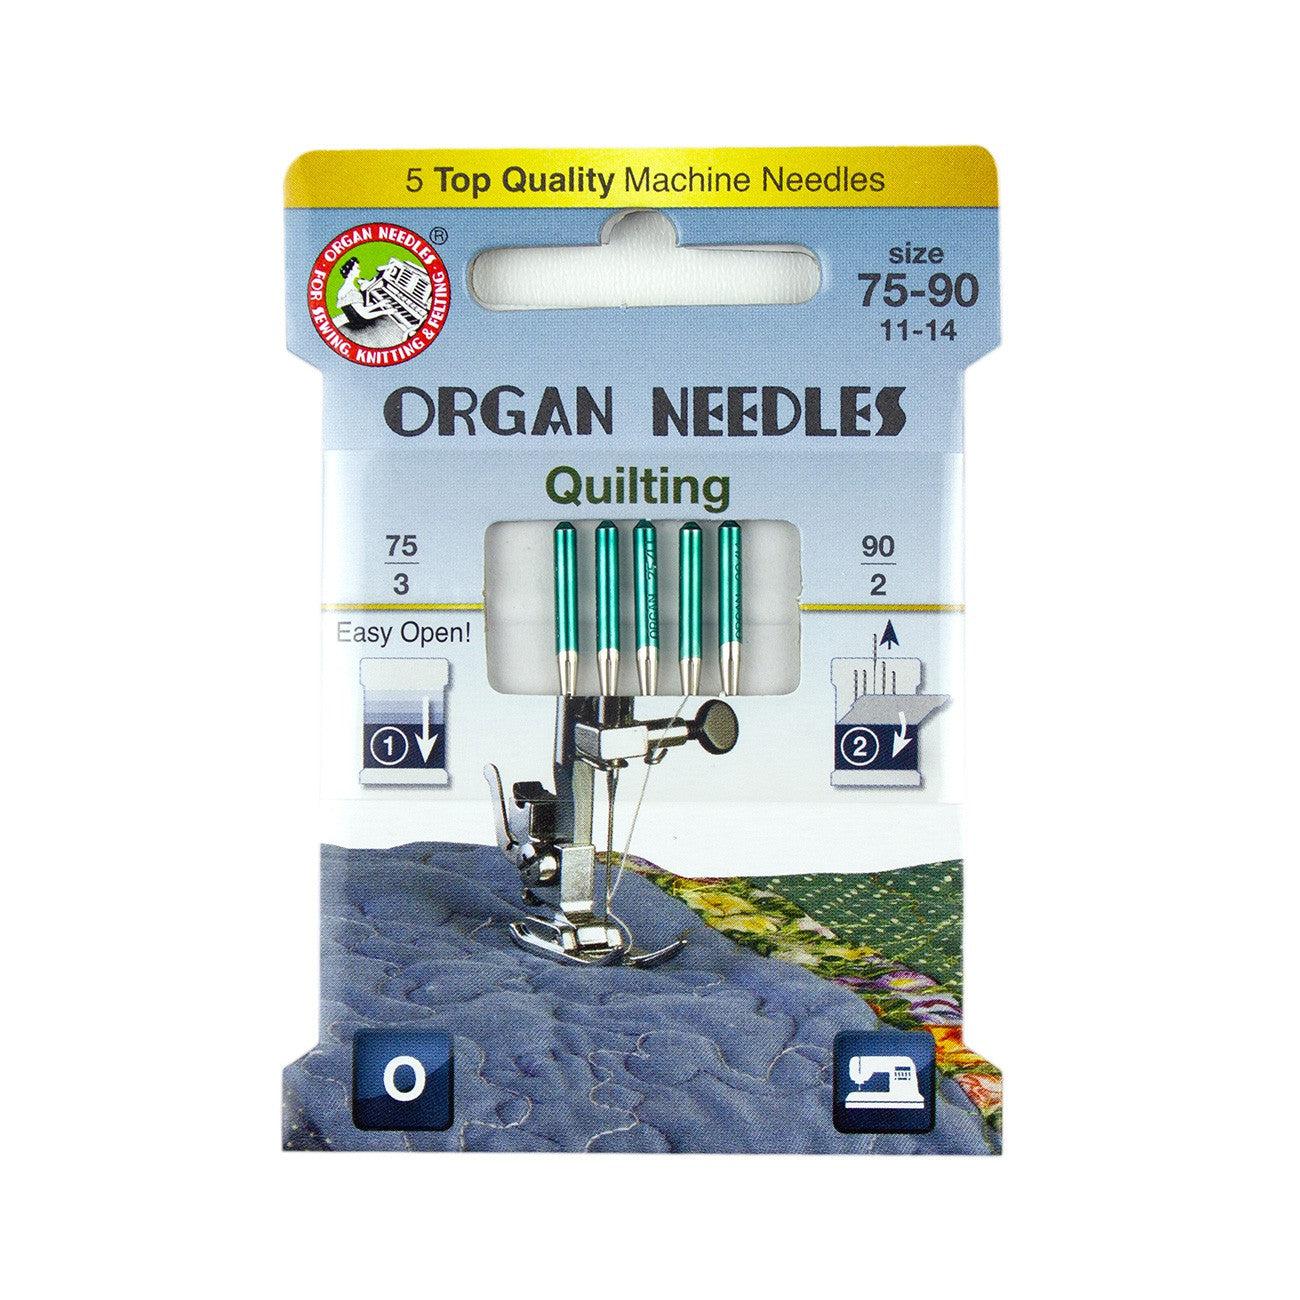 Organ Needles Quilting Assortment 75-90 Eco Pack